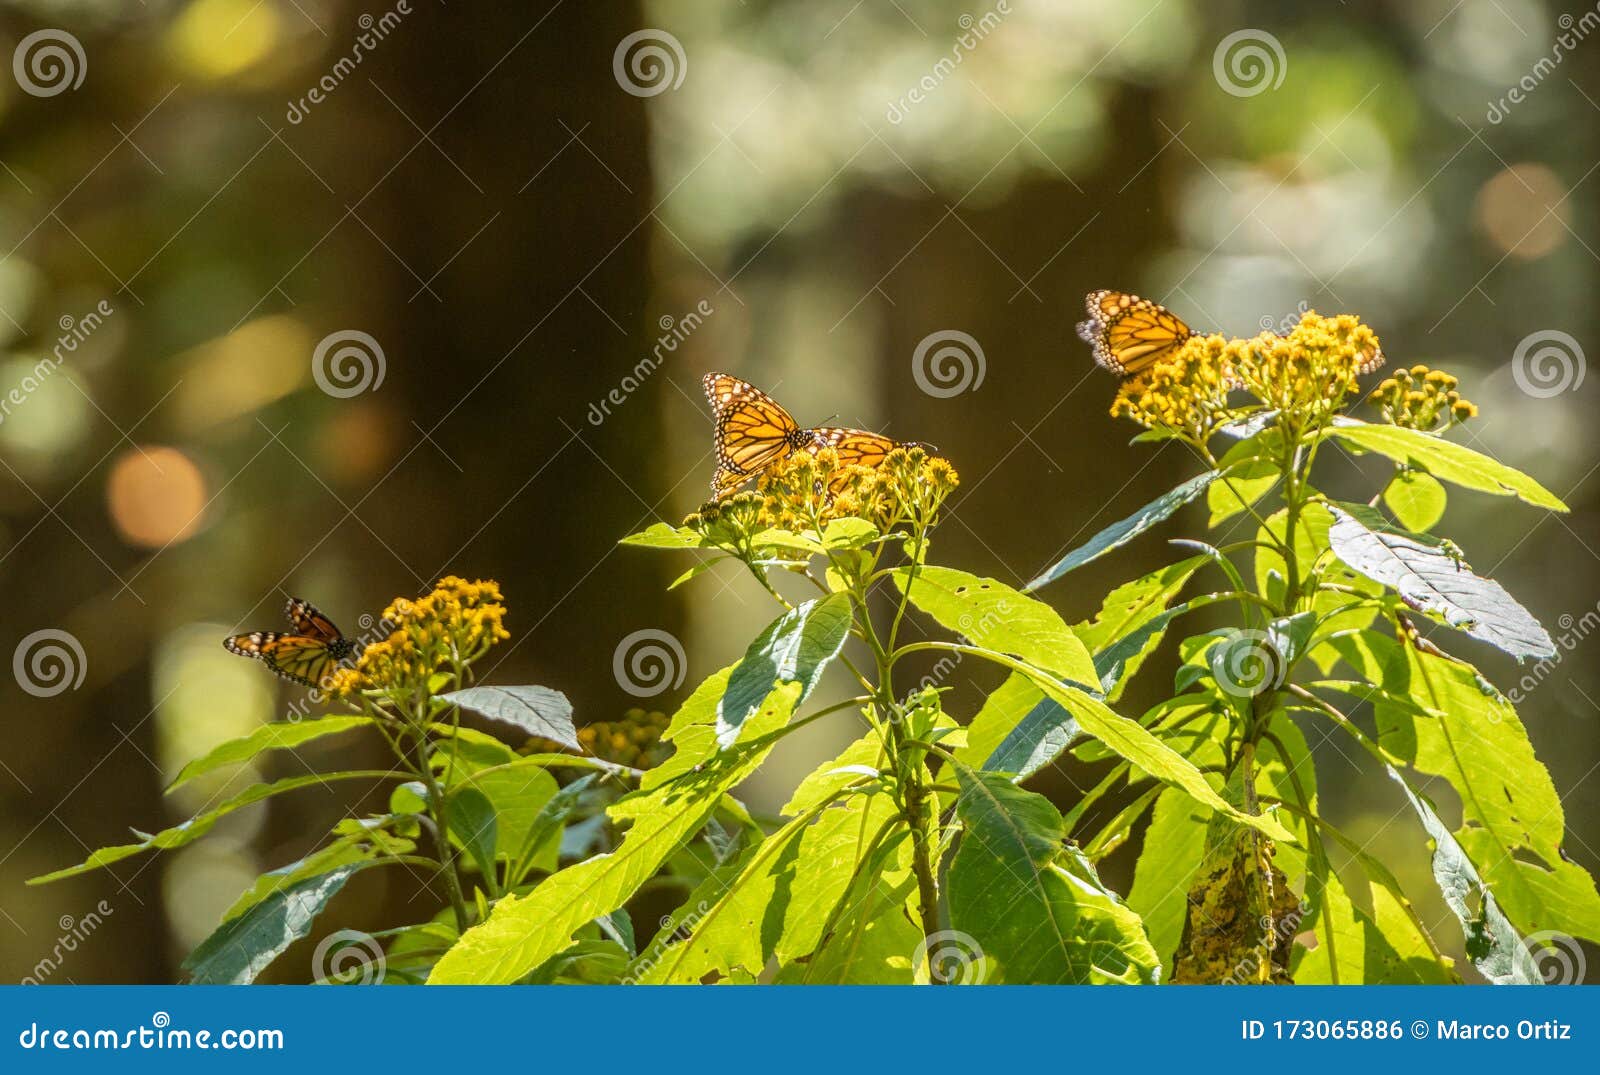 monarch butterflies danaus plexippus feeding on nectar and yellow flower pollen at the sanctuary